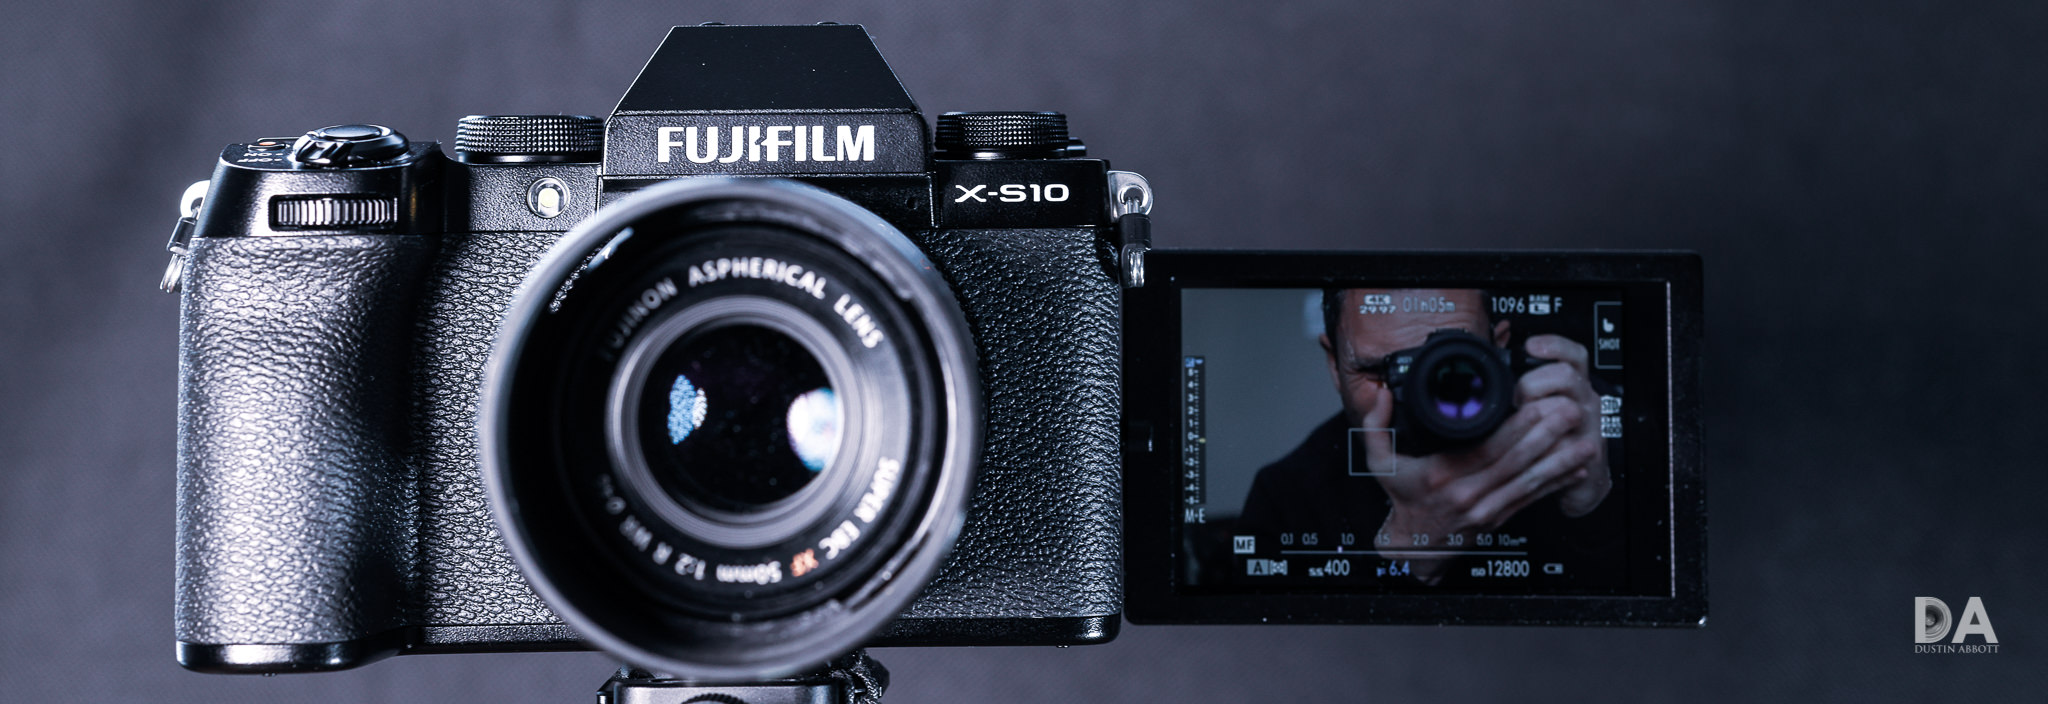 FUJIFILM X-S10 Camera Review - DustinAbbott.net